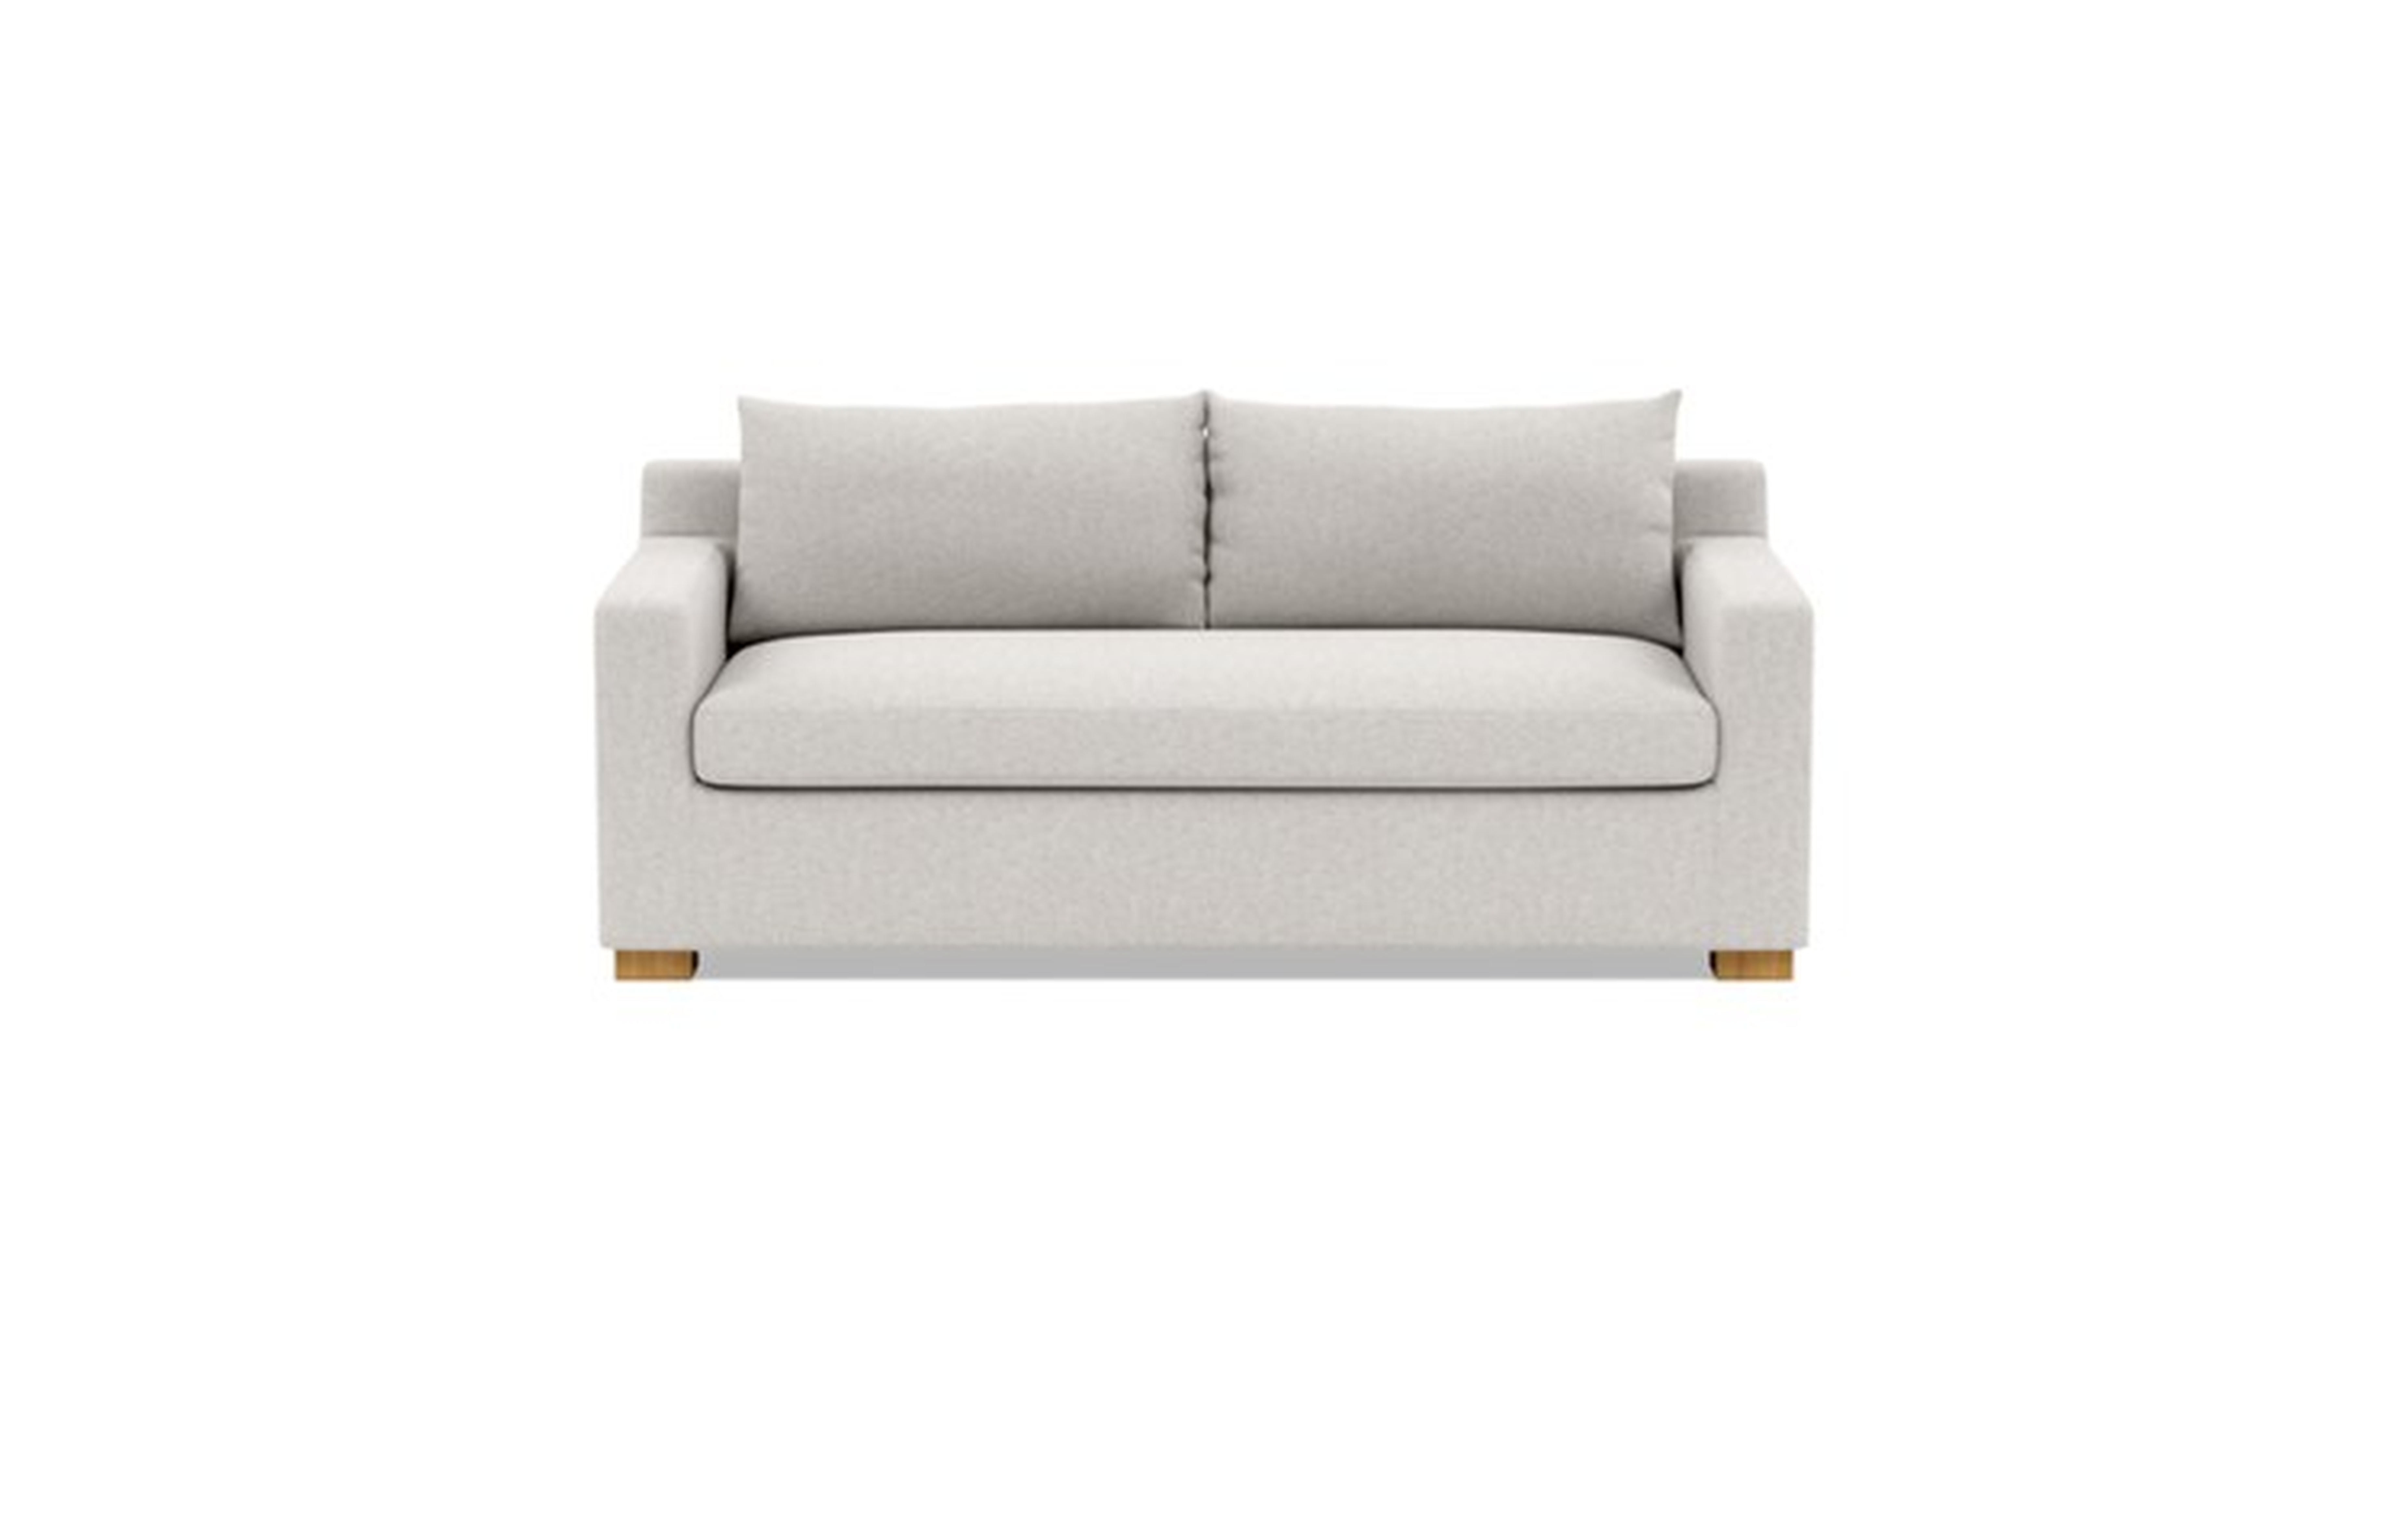 Sloan Sleeper Sleeper Sofa with Beige Pebble Fabric, down alternative cushions, and Natural Oak legs - Interior Define